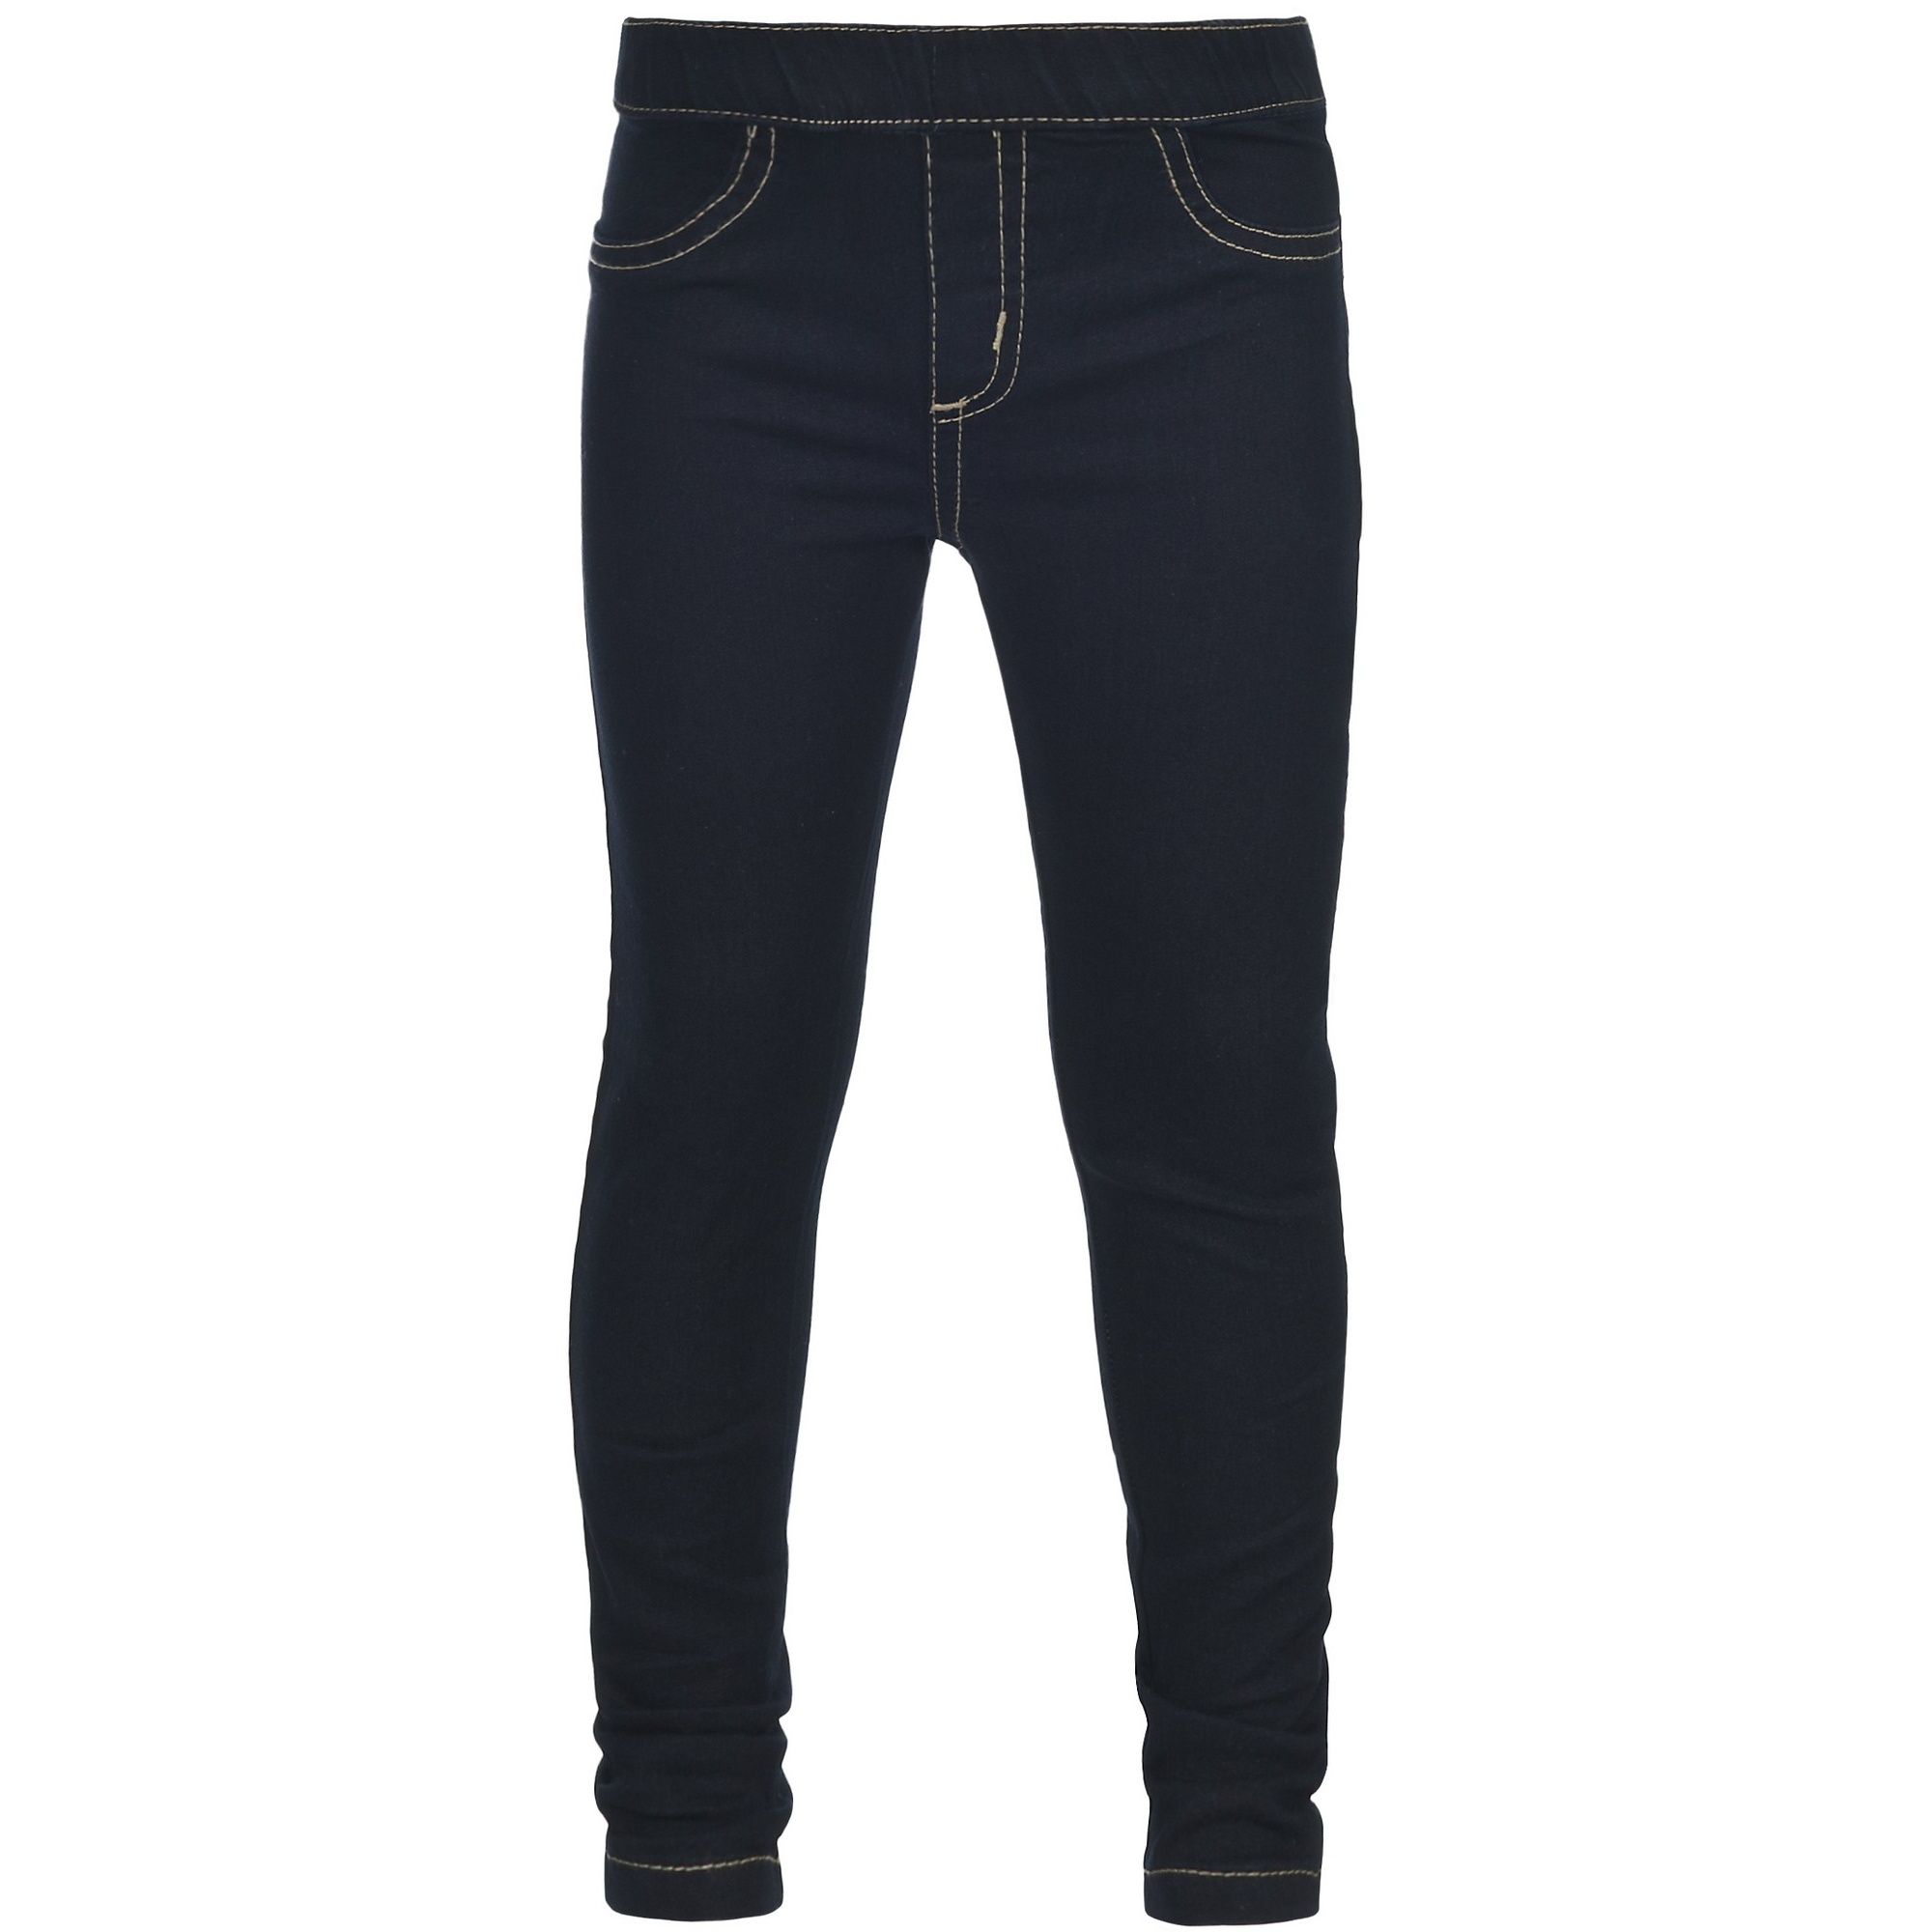 Girls denim skinny jeans. Elasticated waistband. 2 back patch pockets. Mock front pockets. 60% Cotton, 38% Polyester, 2% Viscose.